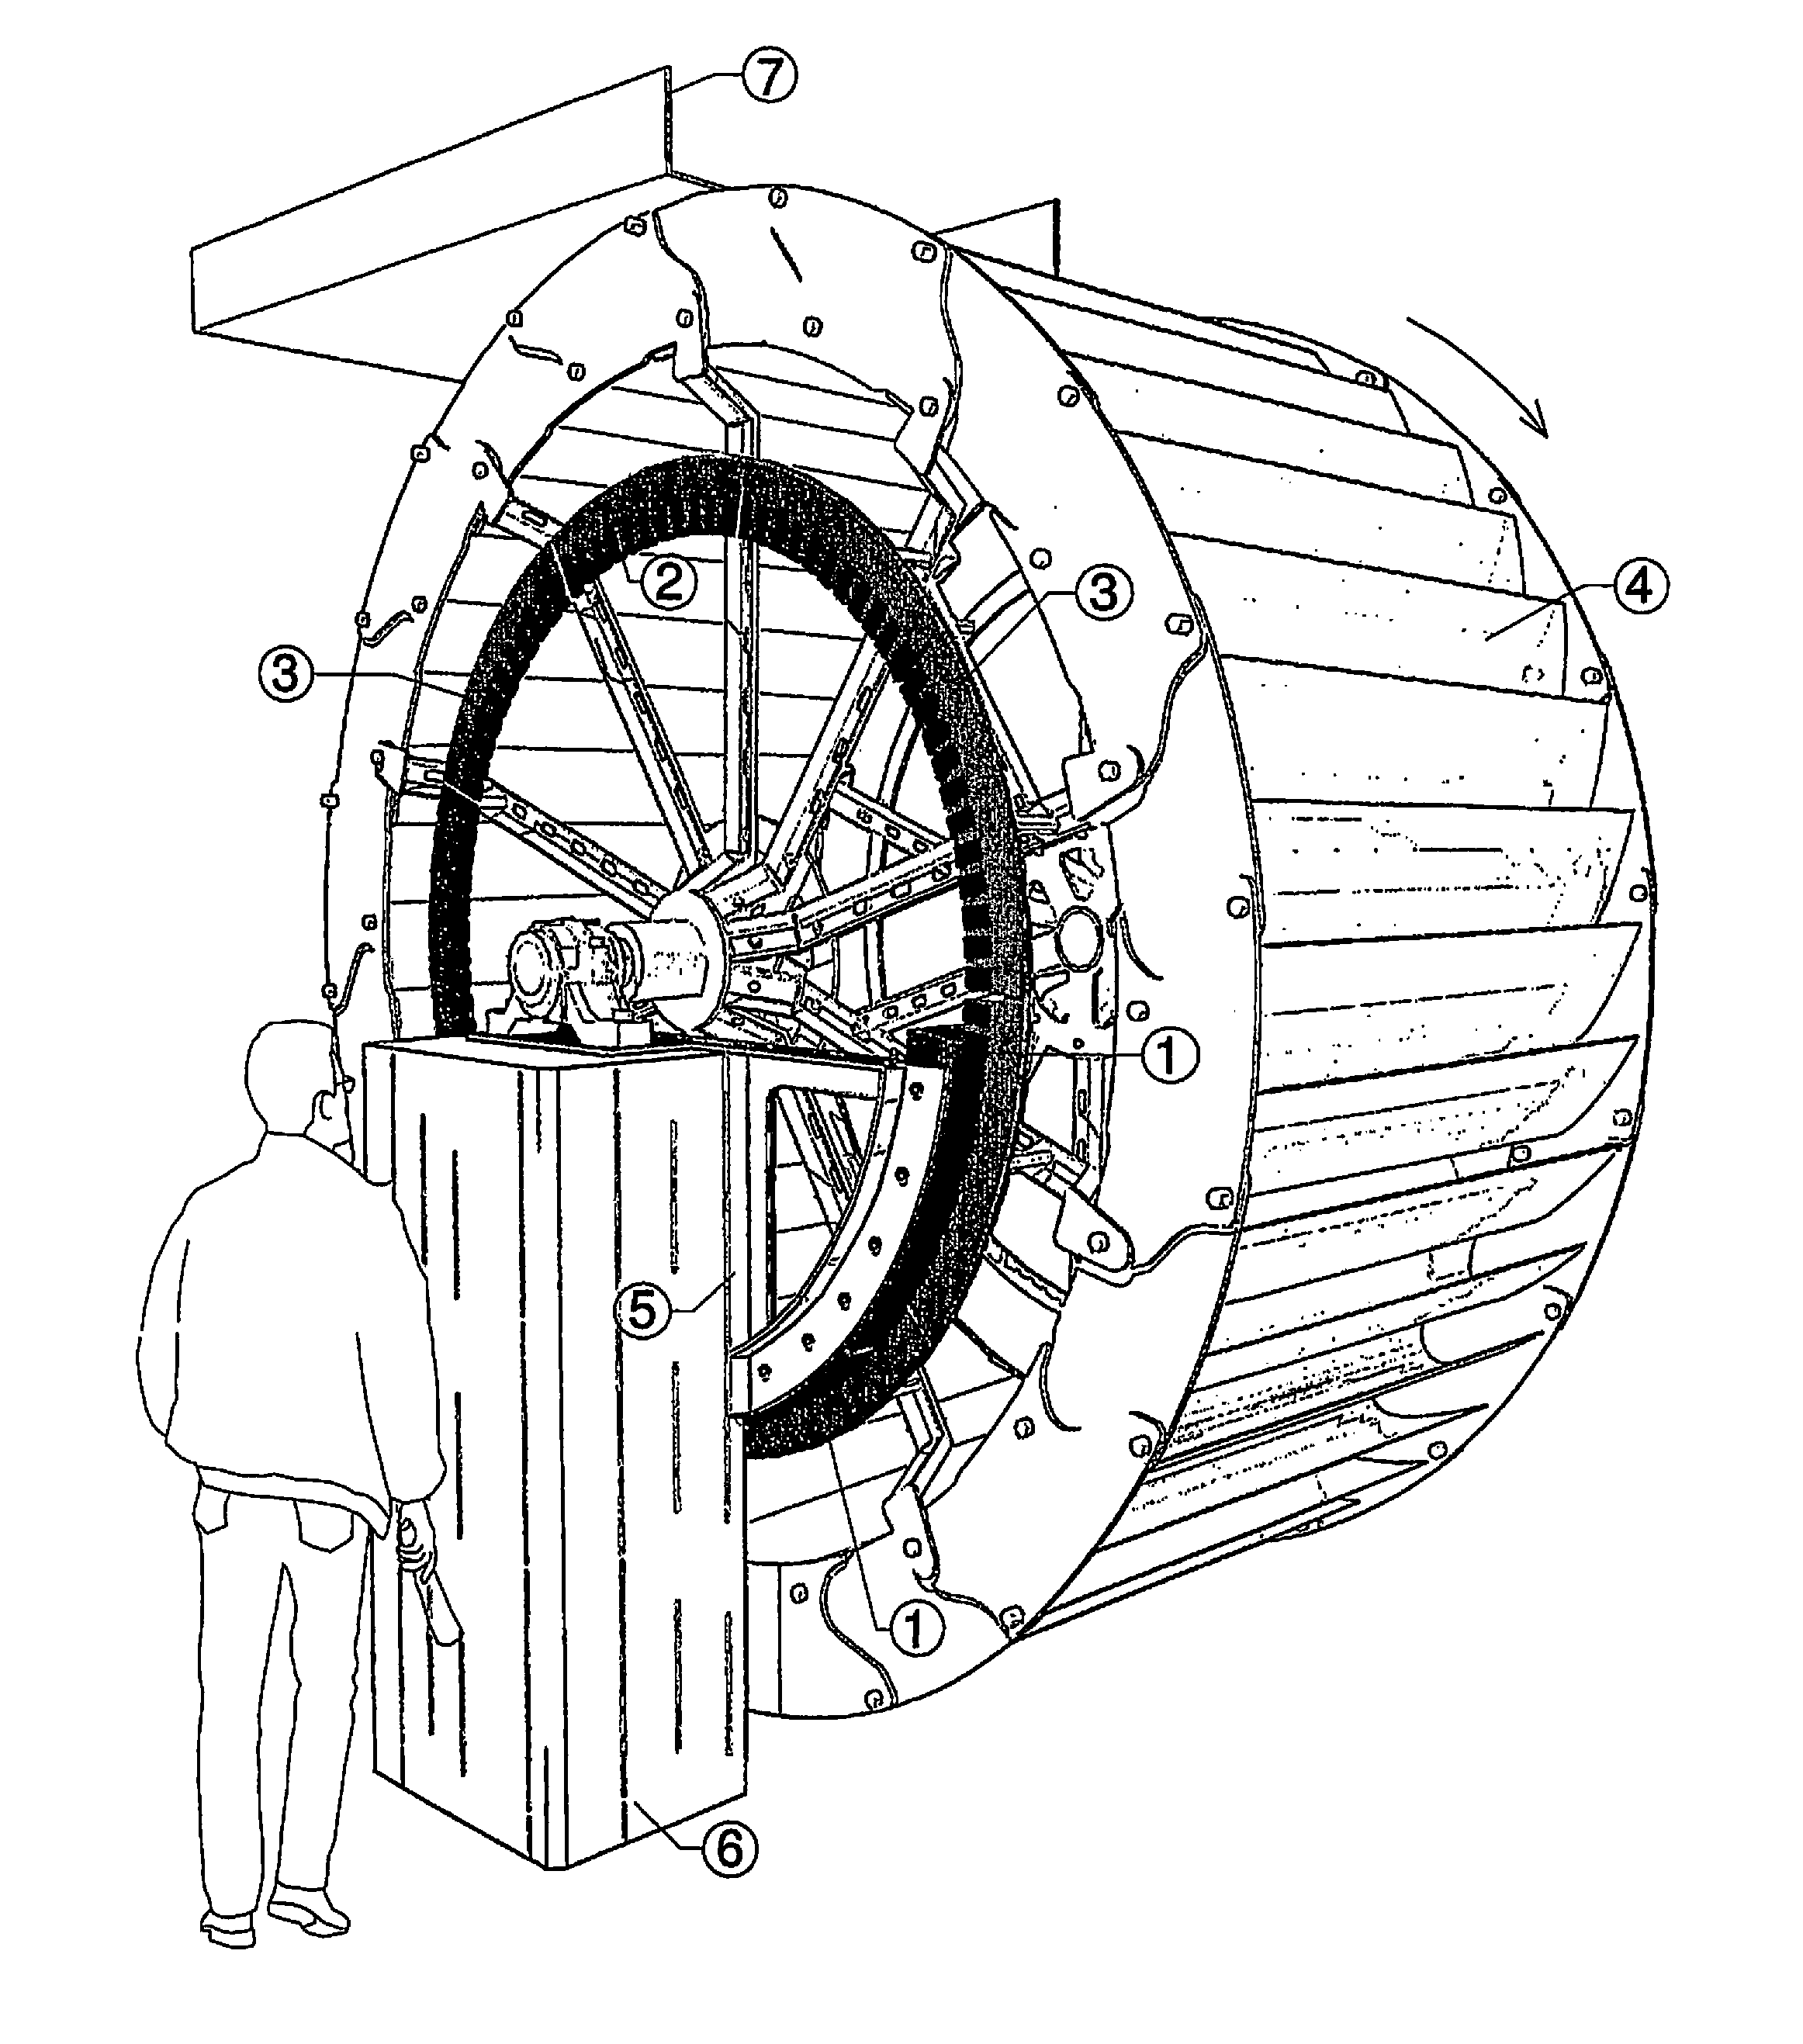 Water wheel comprising a built-in generator